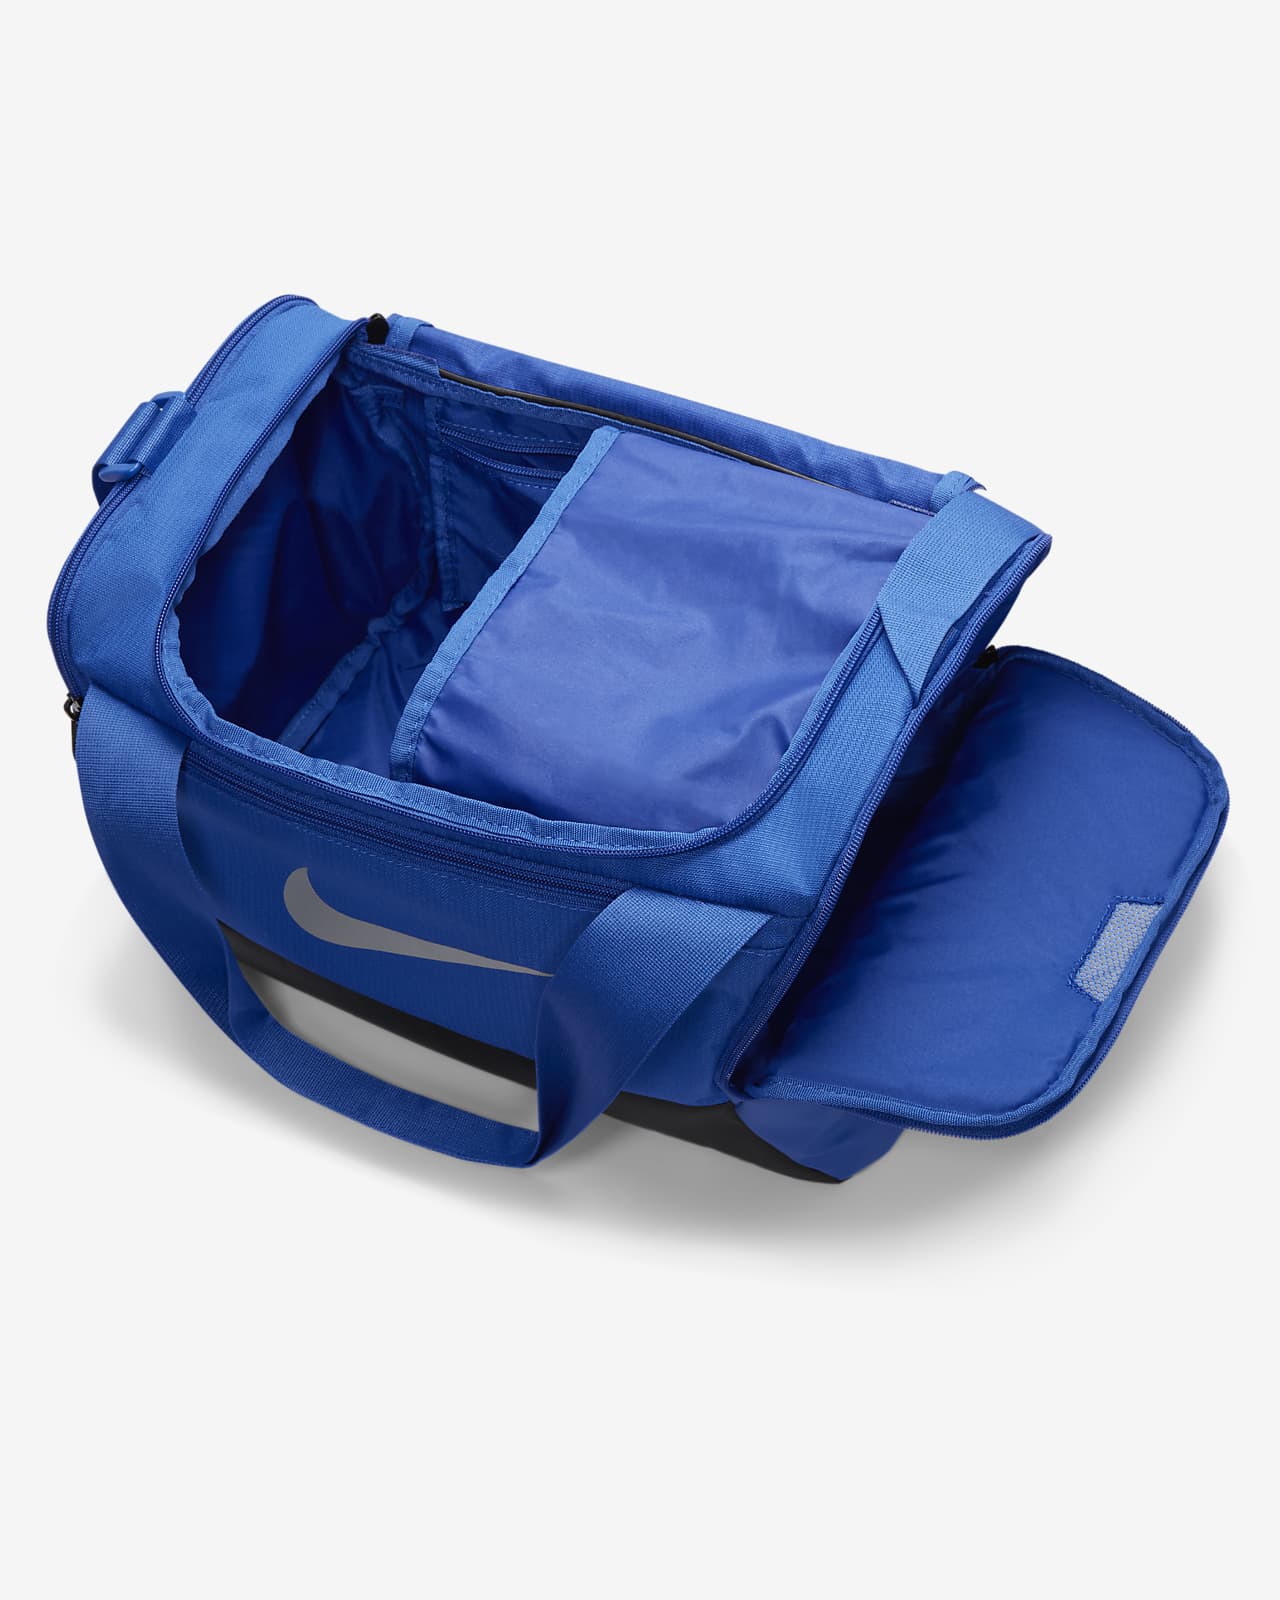 Nike Brasilia Printed Duffel Bag (Extra Small, 25L) - Blue